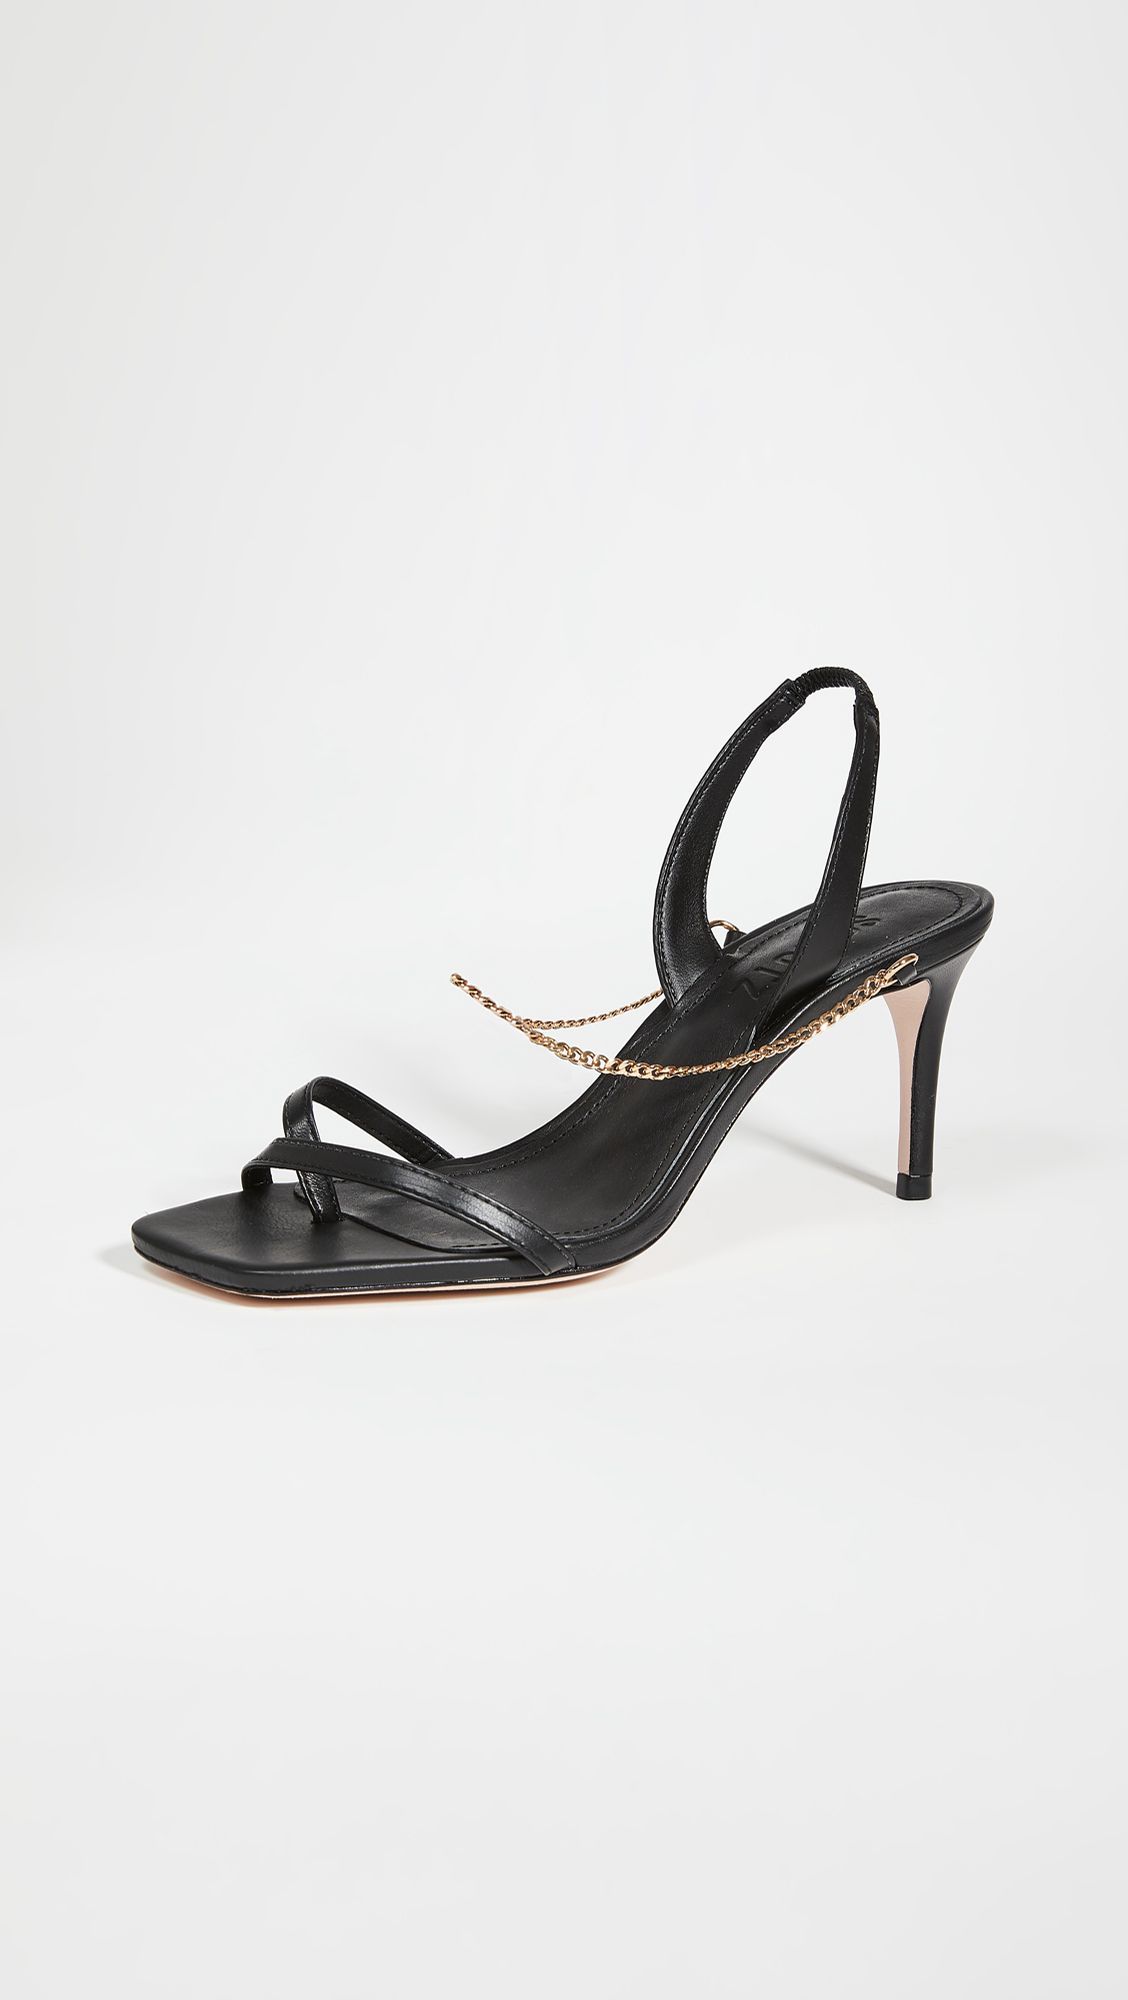 plain black high heels